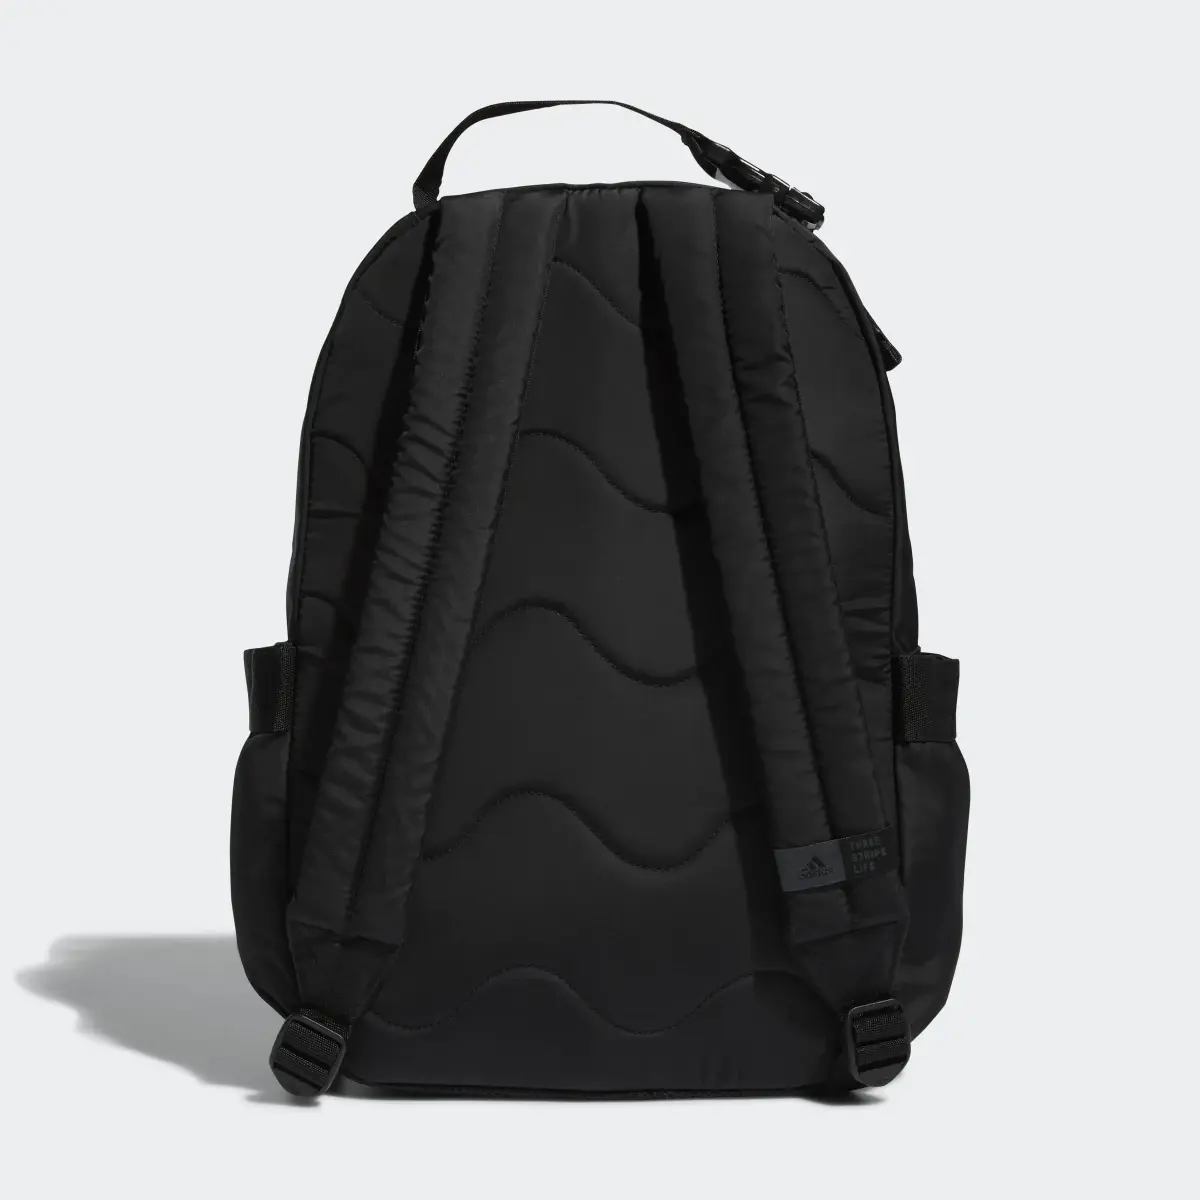 Adidas VFA Backpack. 3